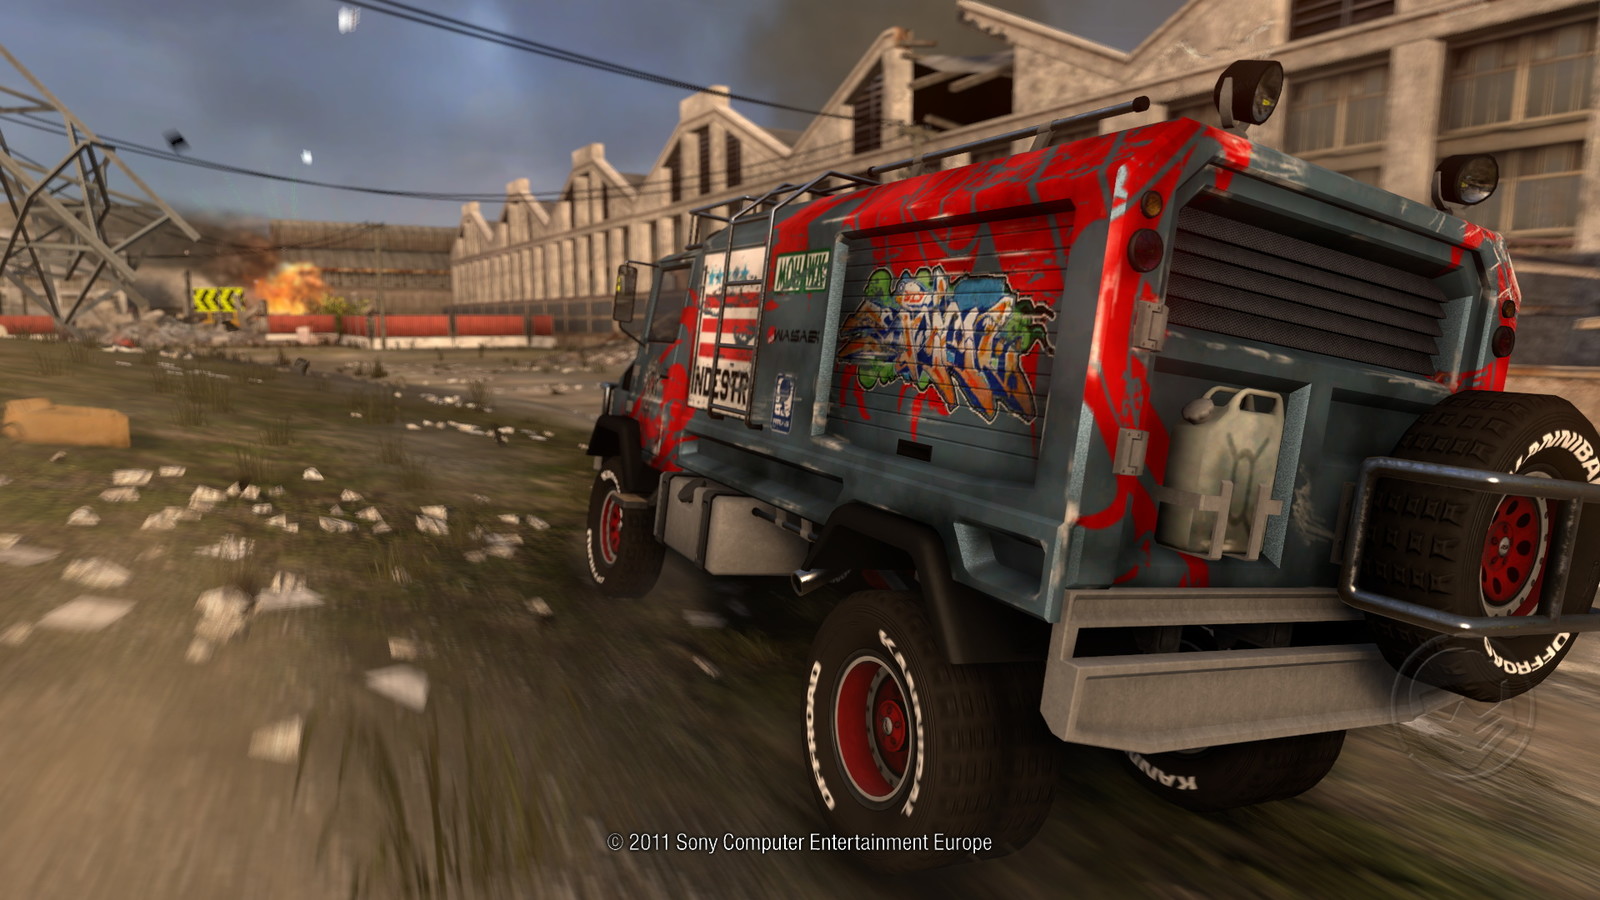 Molotov Uradna
(In-game screenshot)